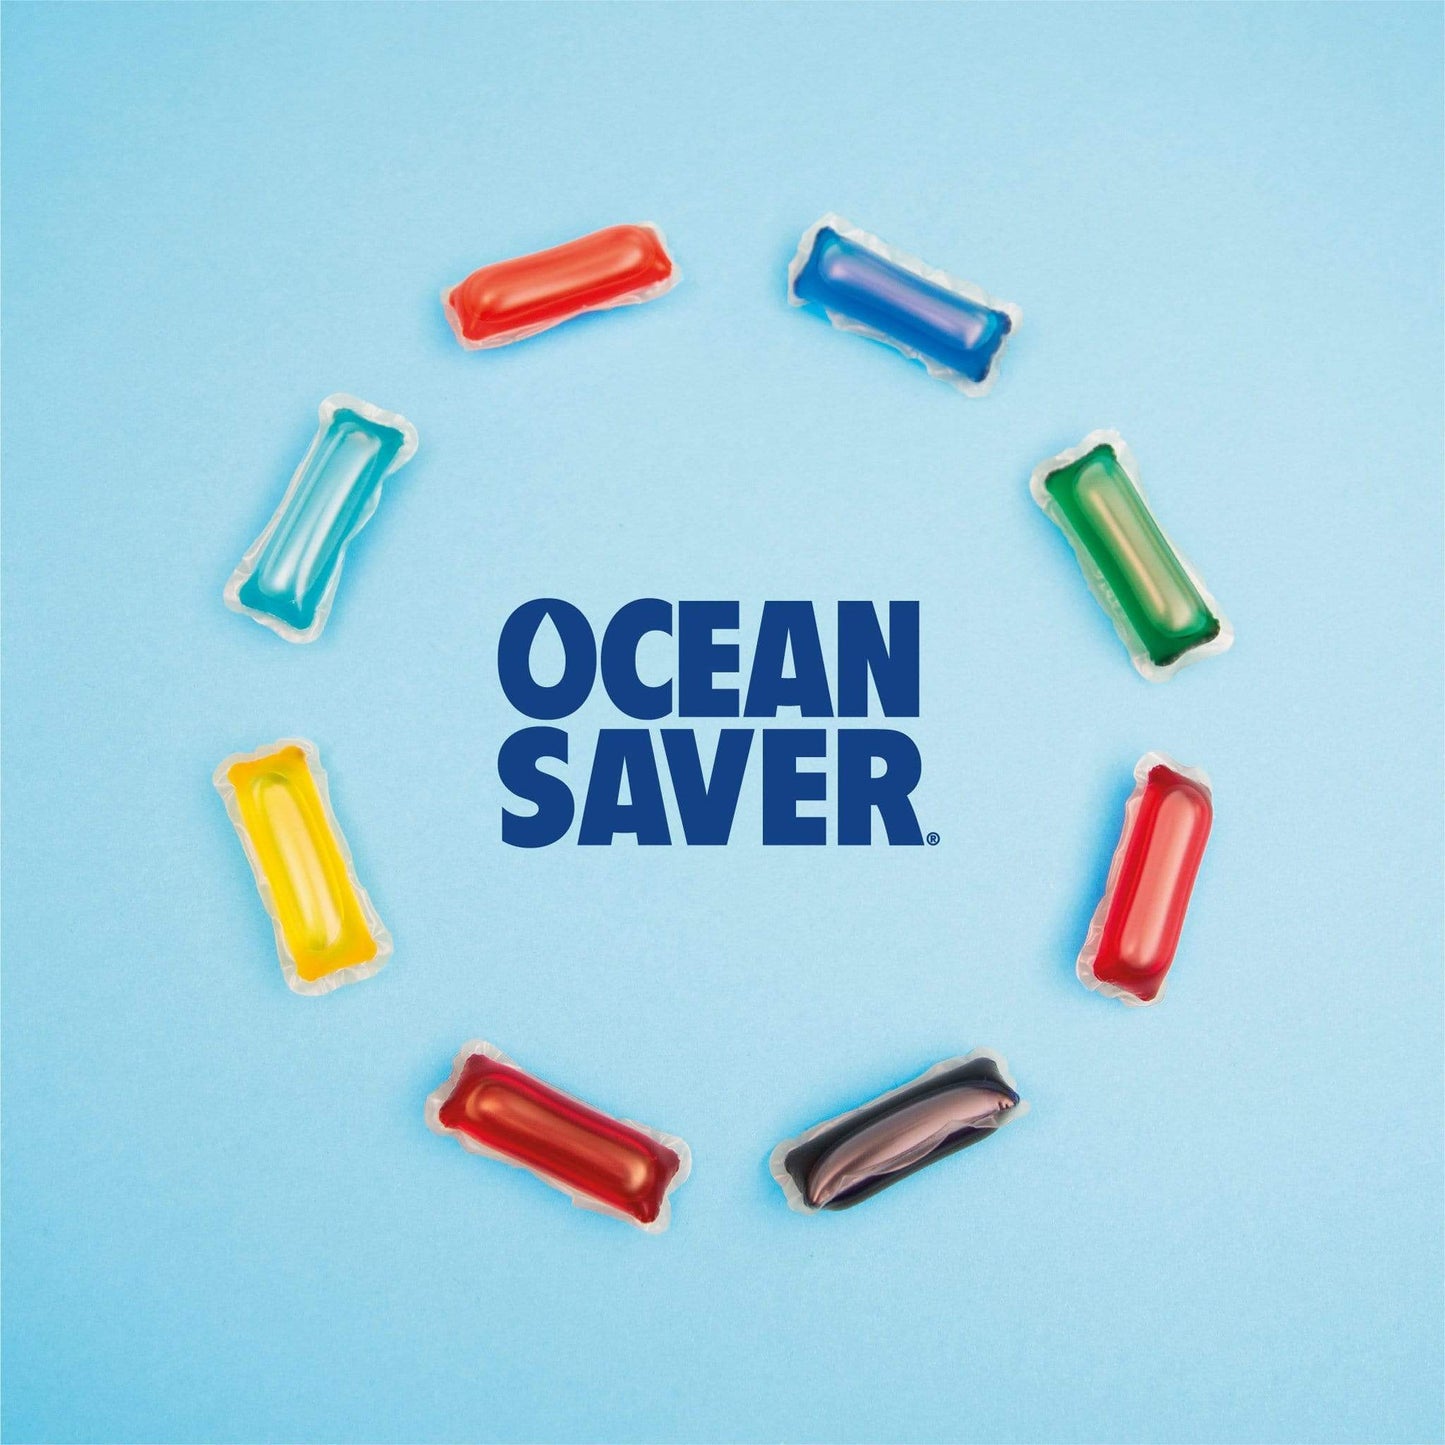 Ocean Saver Glass Cleaners Glass Cleaner Refill Drop, Sea Spray - Ocean Saver